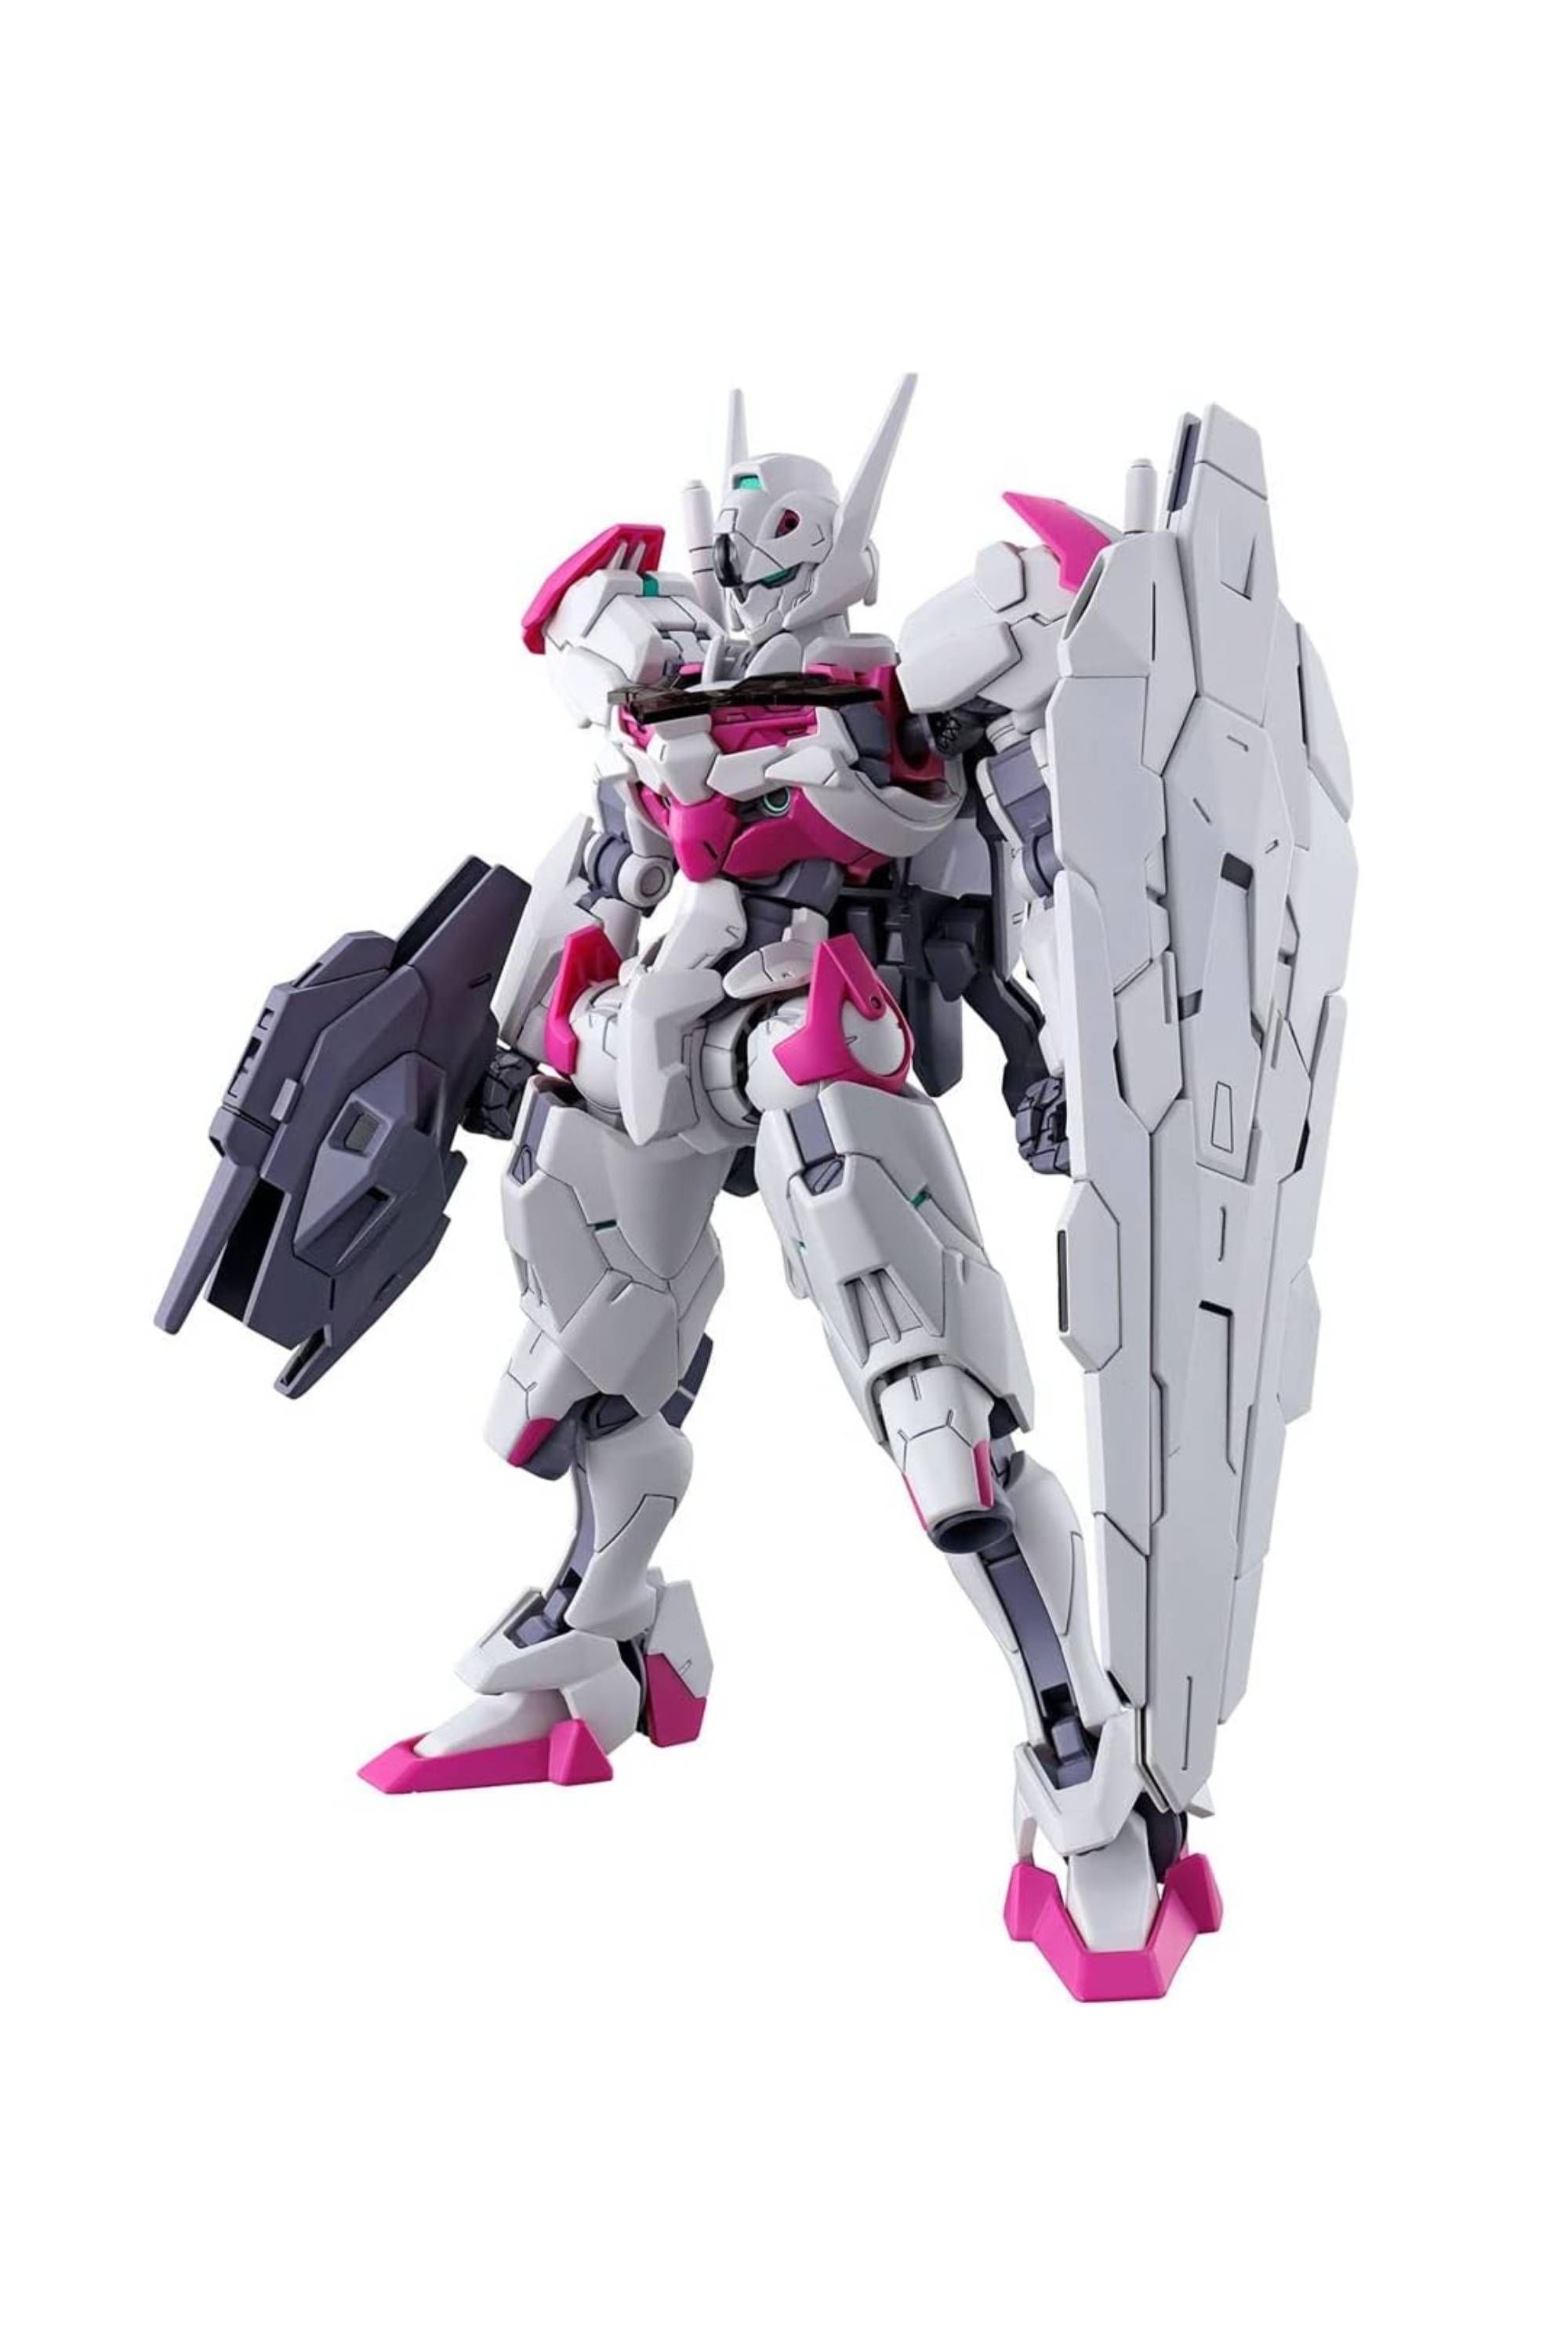 Gunpla: i modellini kit più famosi di Gundam